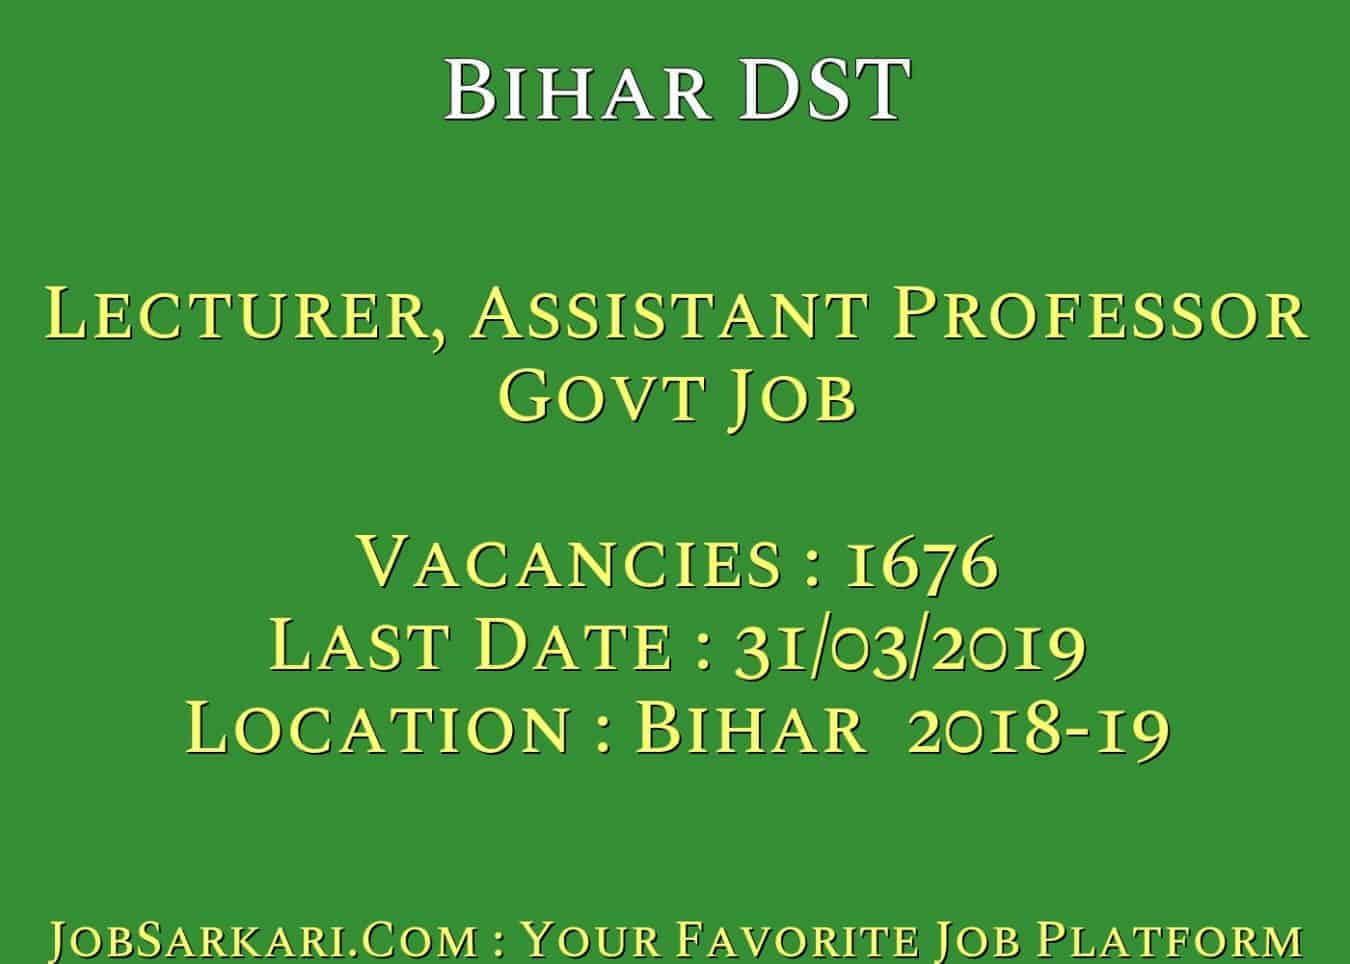 Bihar DST Recruitment 2019 For Lecturer, Assistant Professor Govt Job